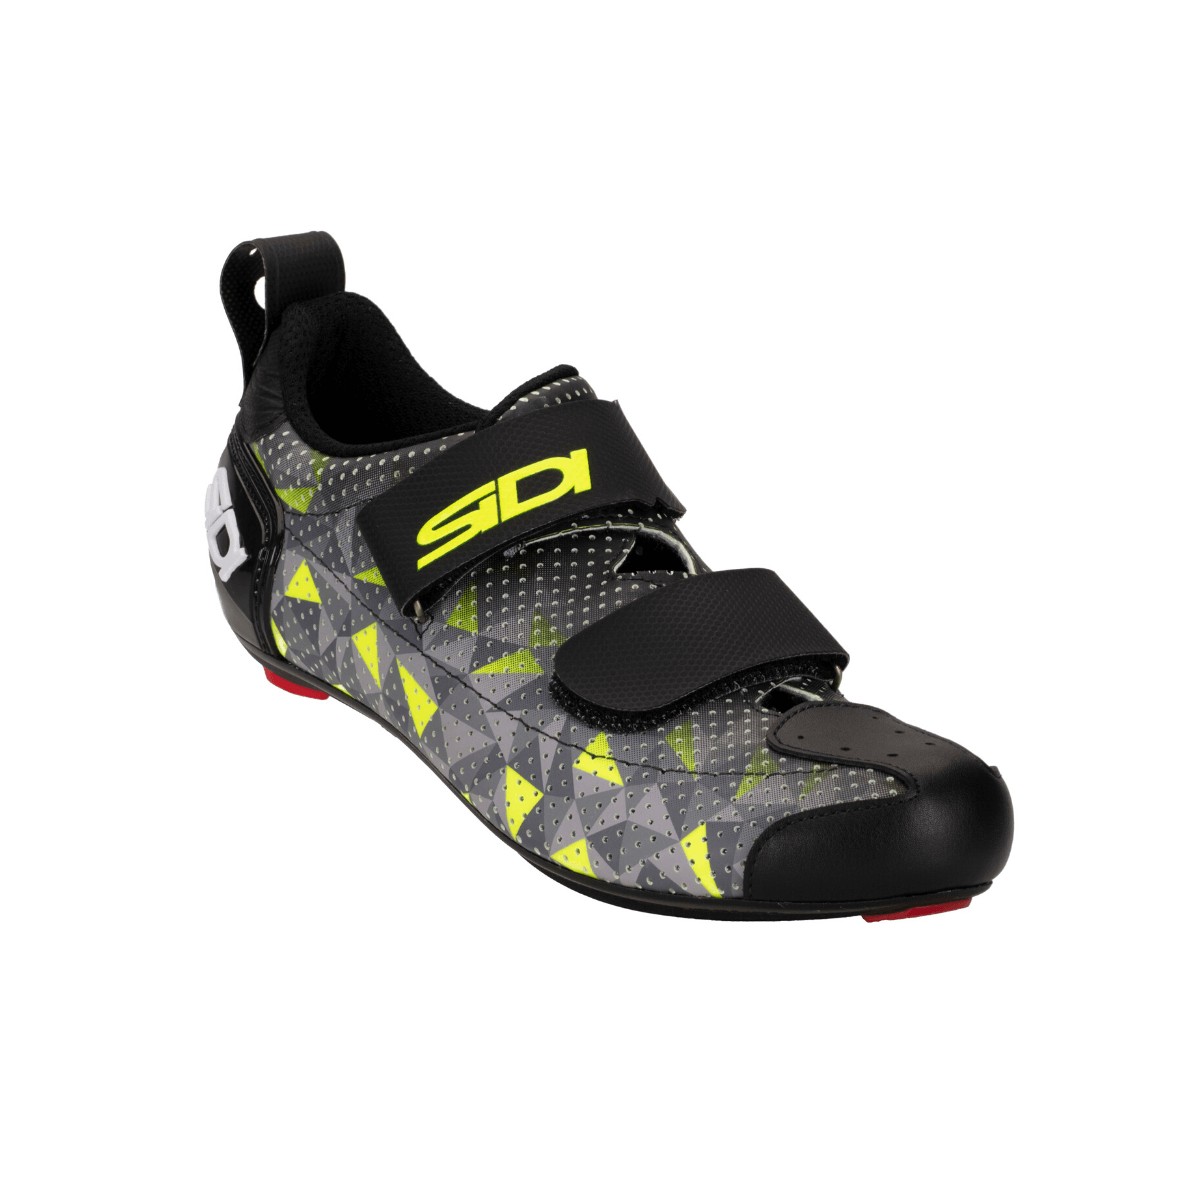 Sidi T5 Air Carbon Gray Yellow Shoes, Size 43 - EUR